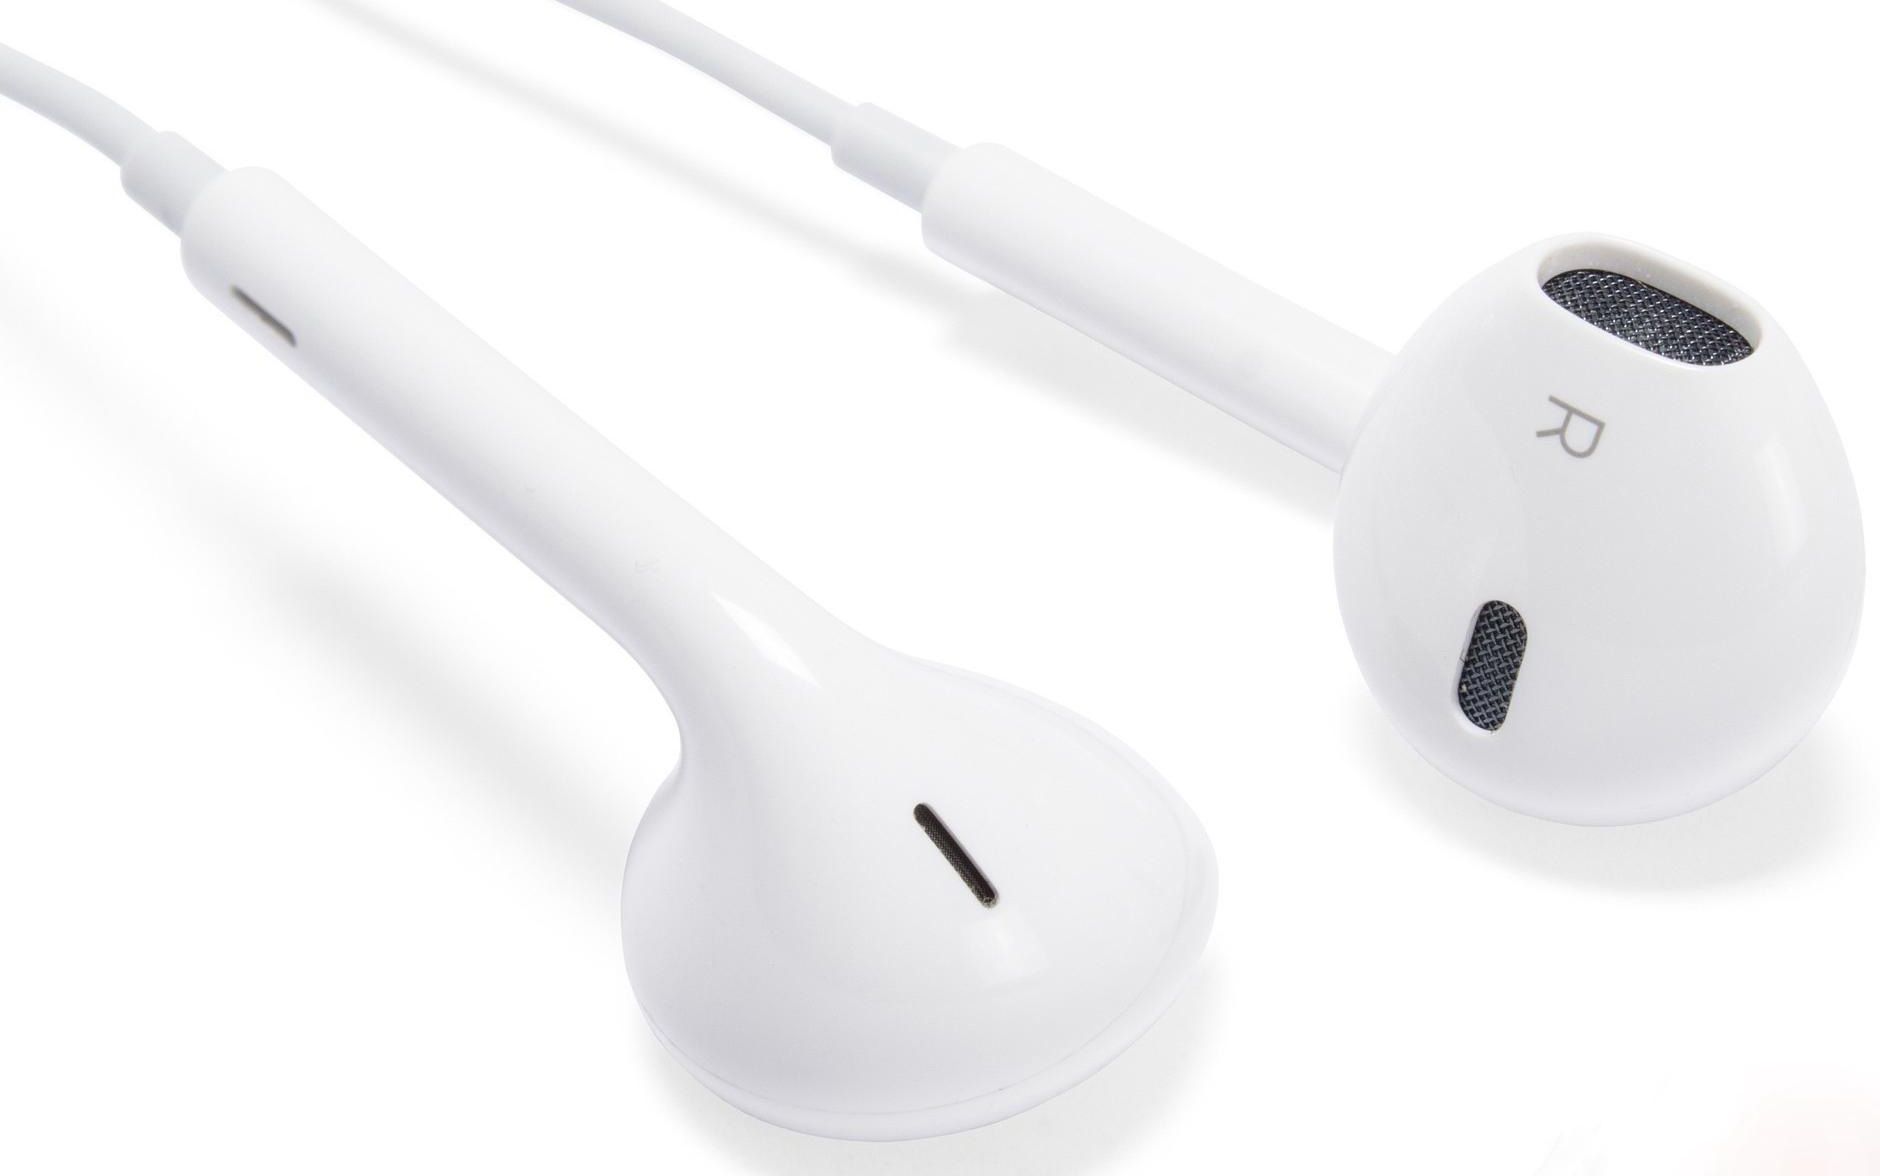 Apple Наушники EarPods (3.5 мм)